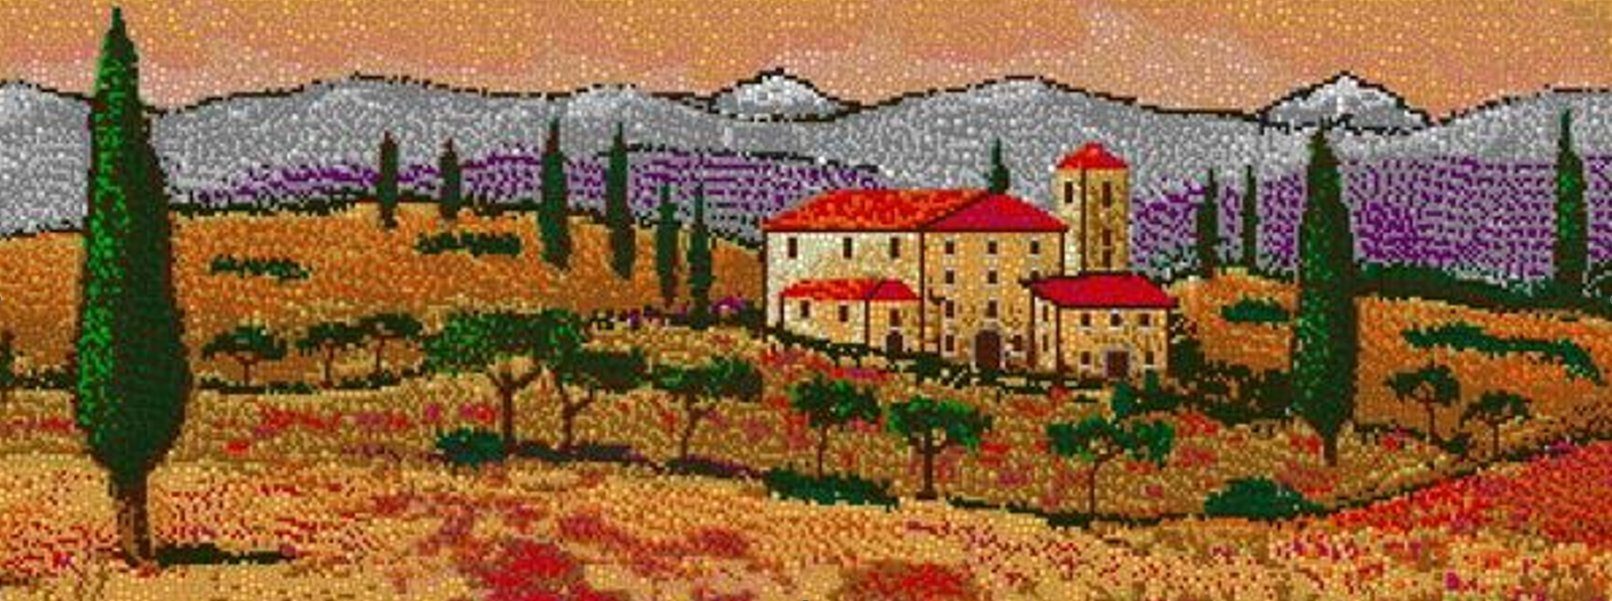 Stick it Steckpuzzle Stickit-Großbild Toscana Landschaft, 30700 Puzzleteile